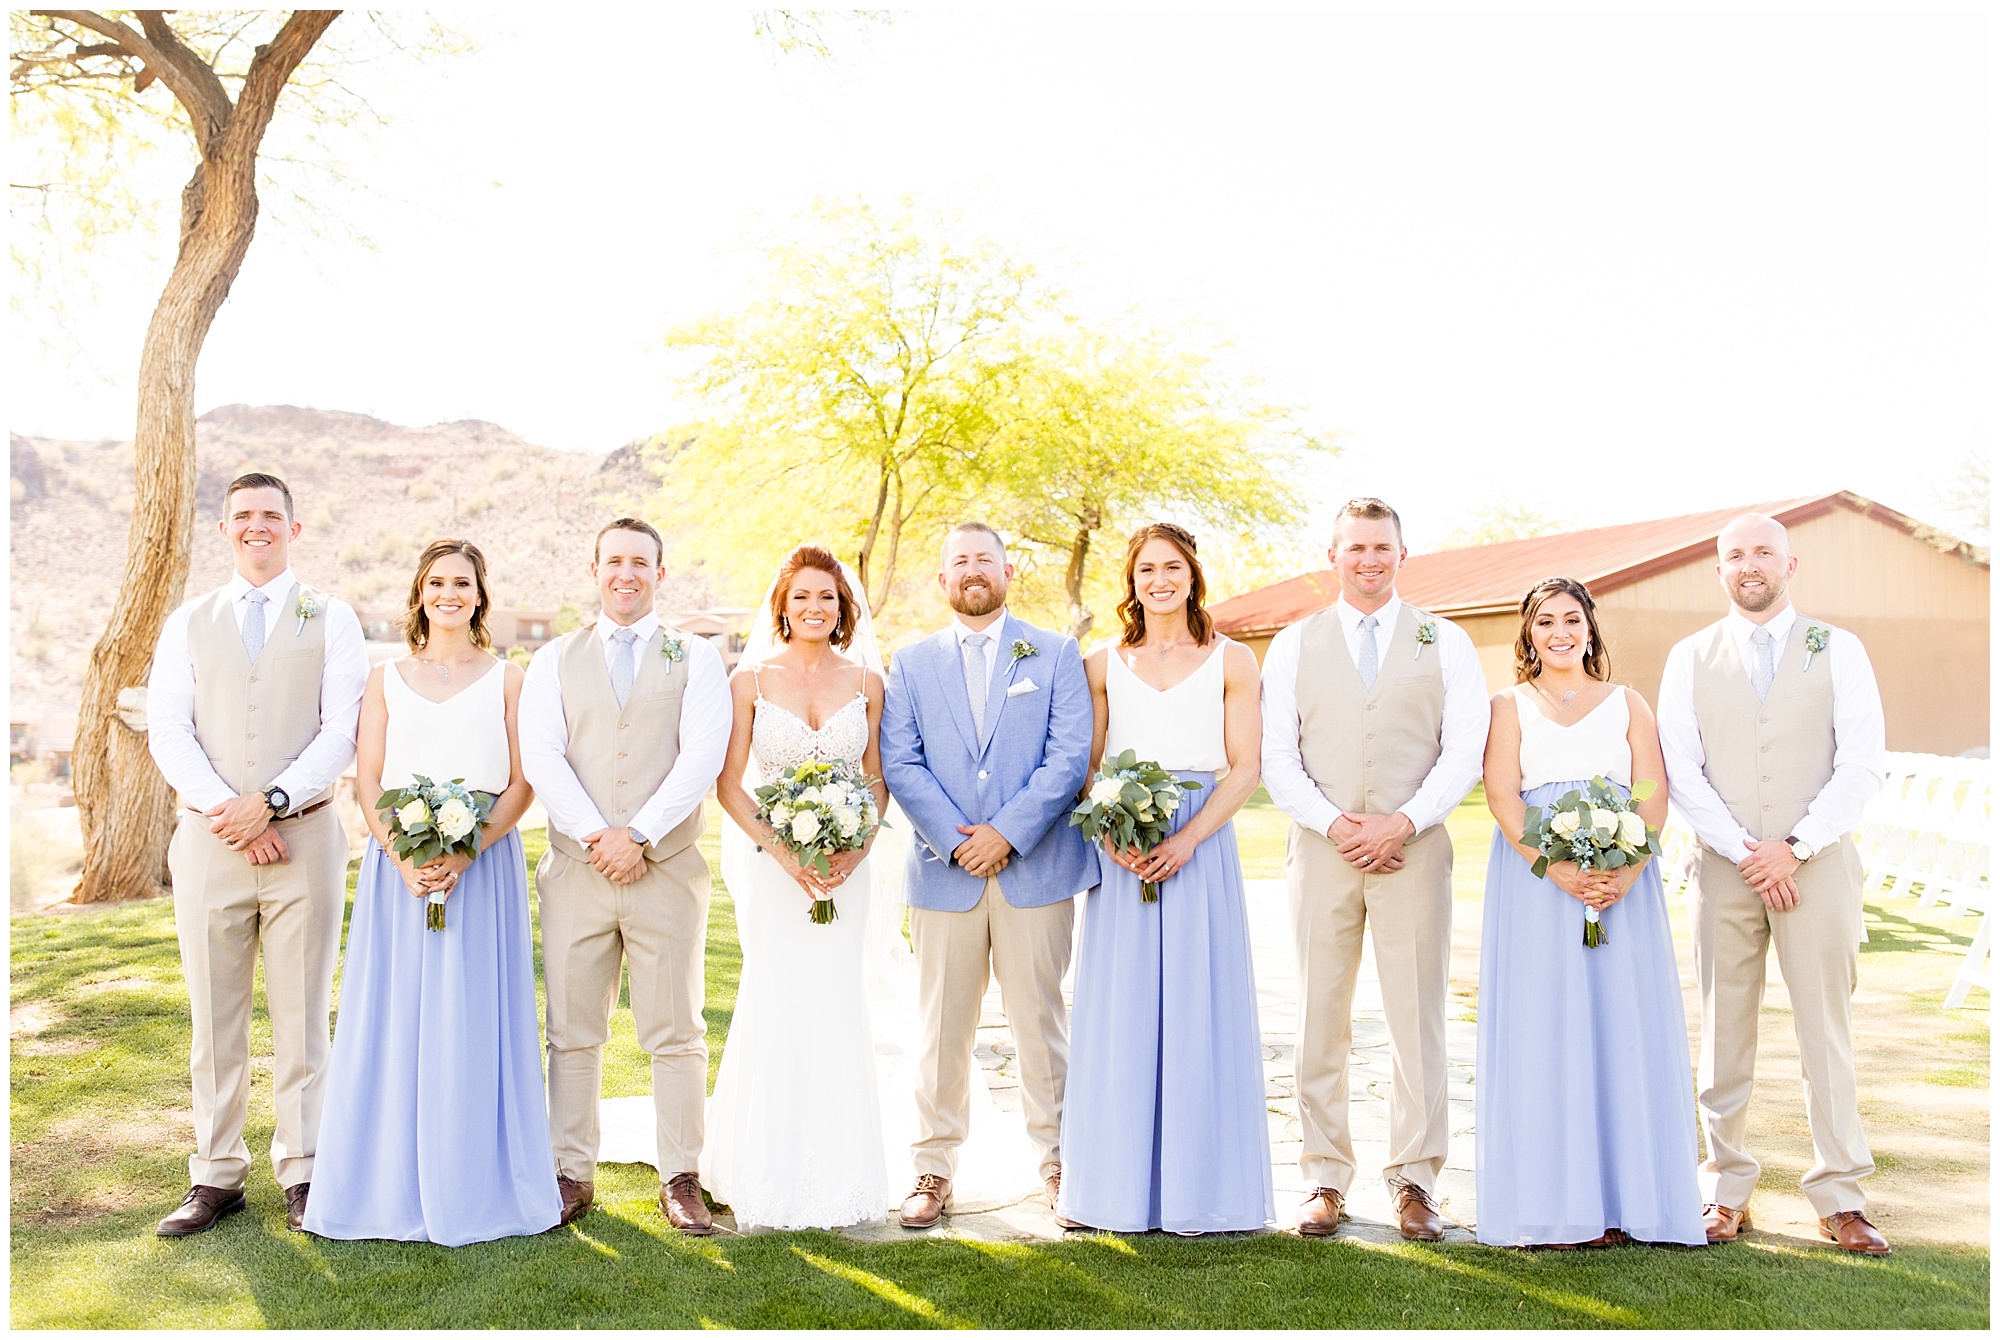 Eagle Mountain Golf Course Wedding | Fountain Hills, Arizona |Taylor & Leah